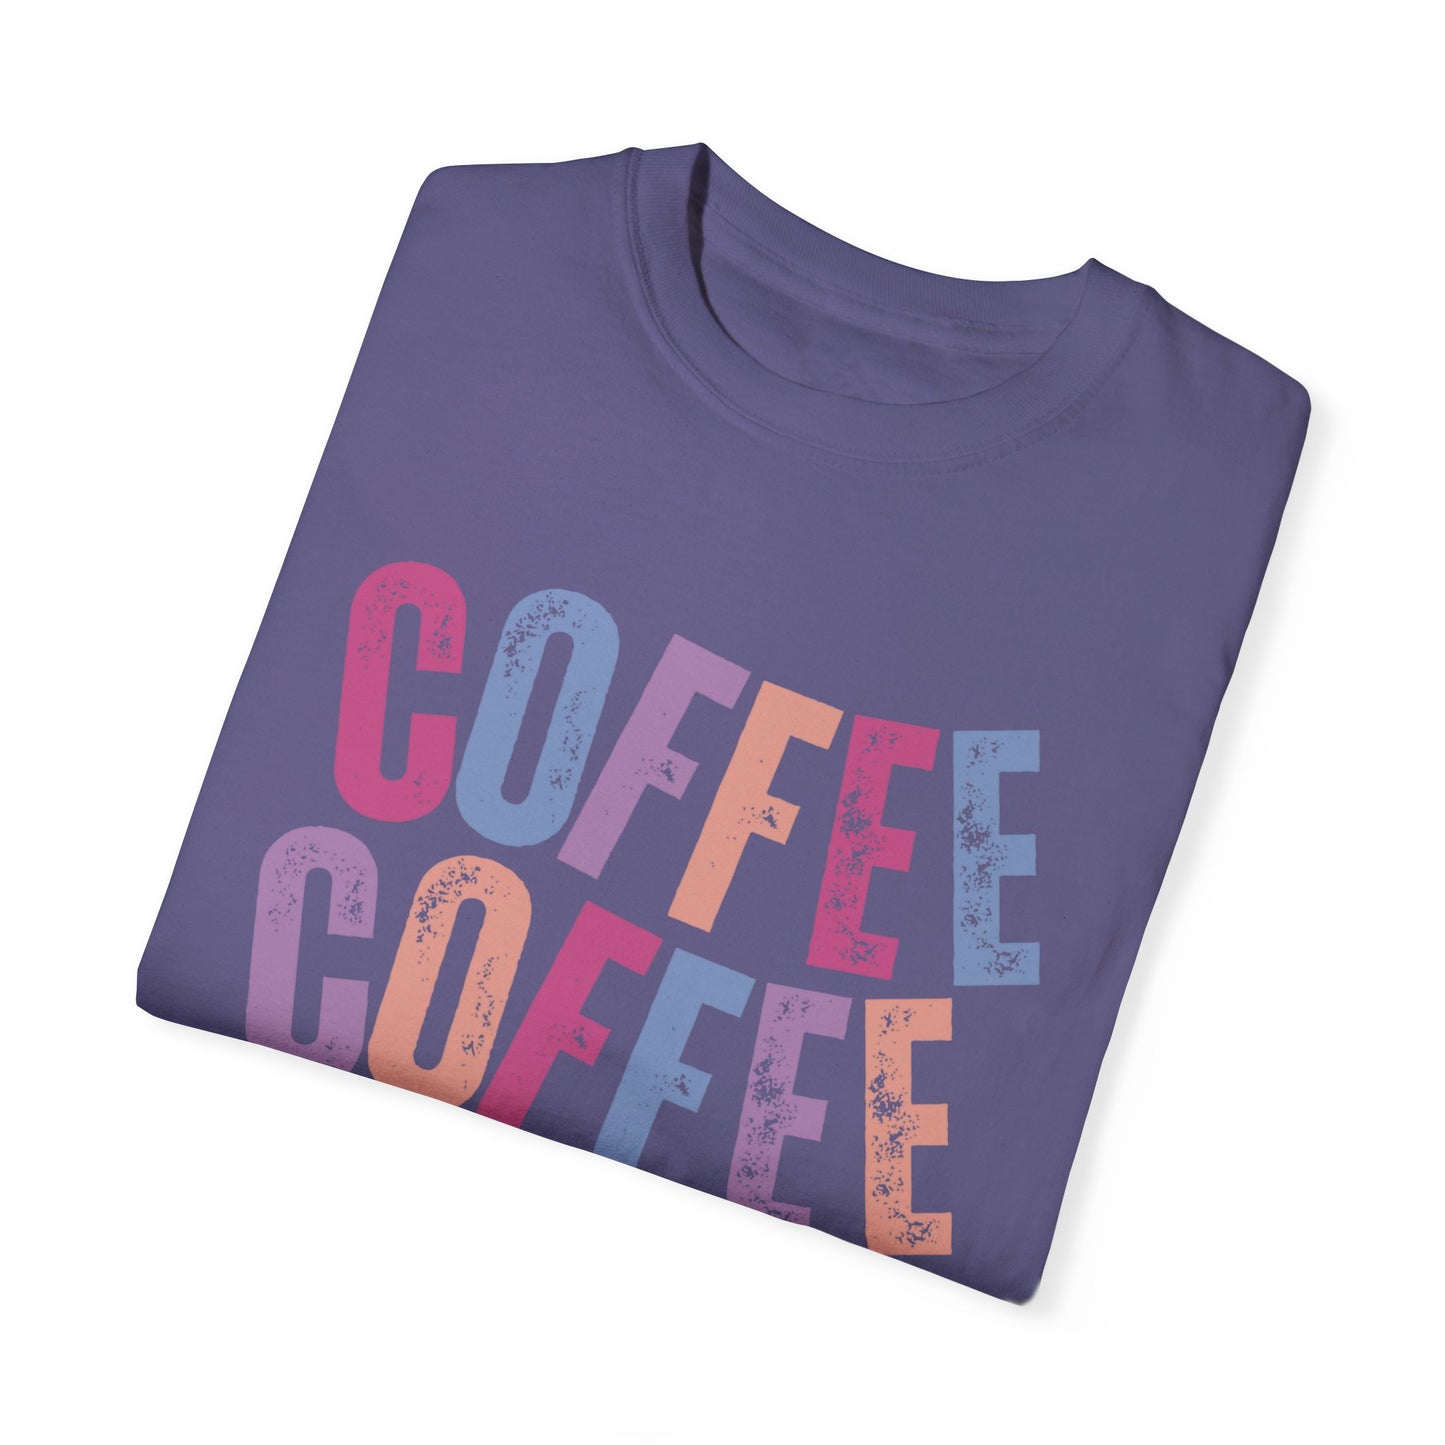 Coffee Coffee Coffee Women's Comfort Colors T-Shirt - Eddy and Rita